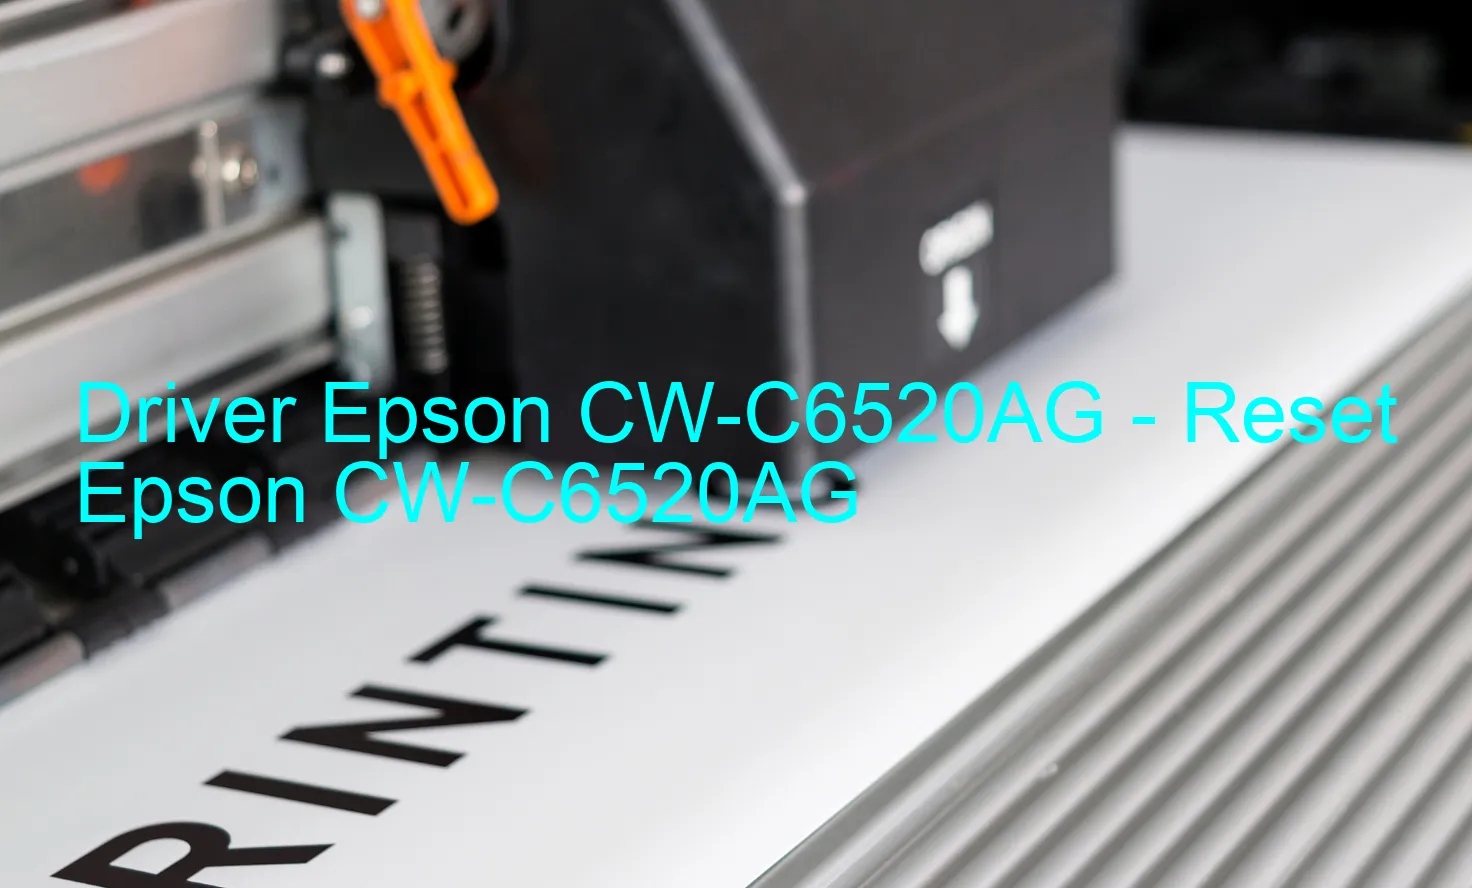 Epson CW-C6520AGのドライバー、Epson CW-C6520AGのリセットソフトウェア